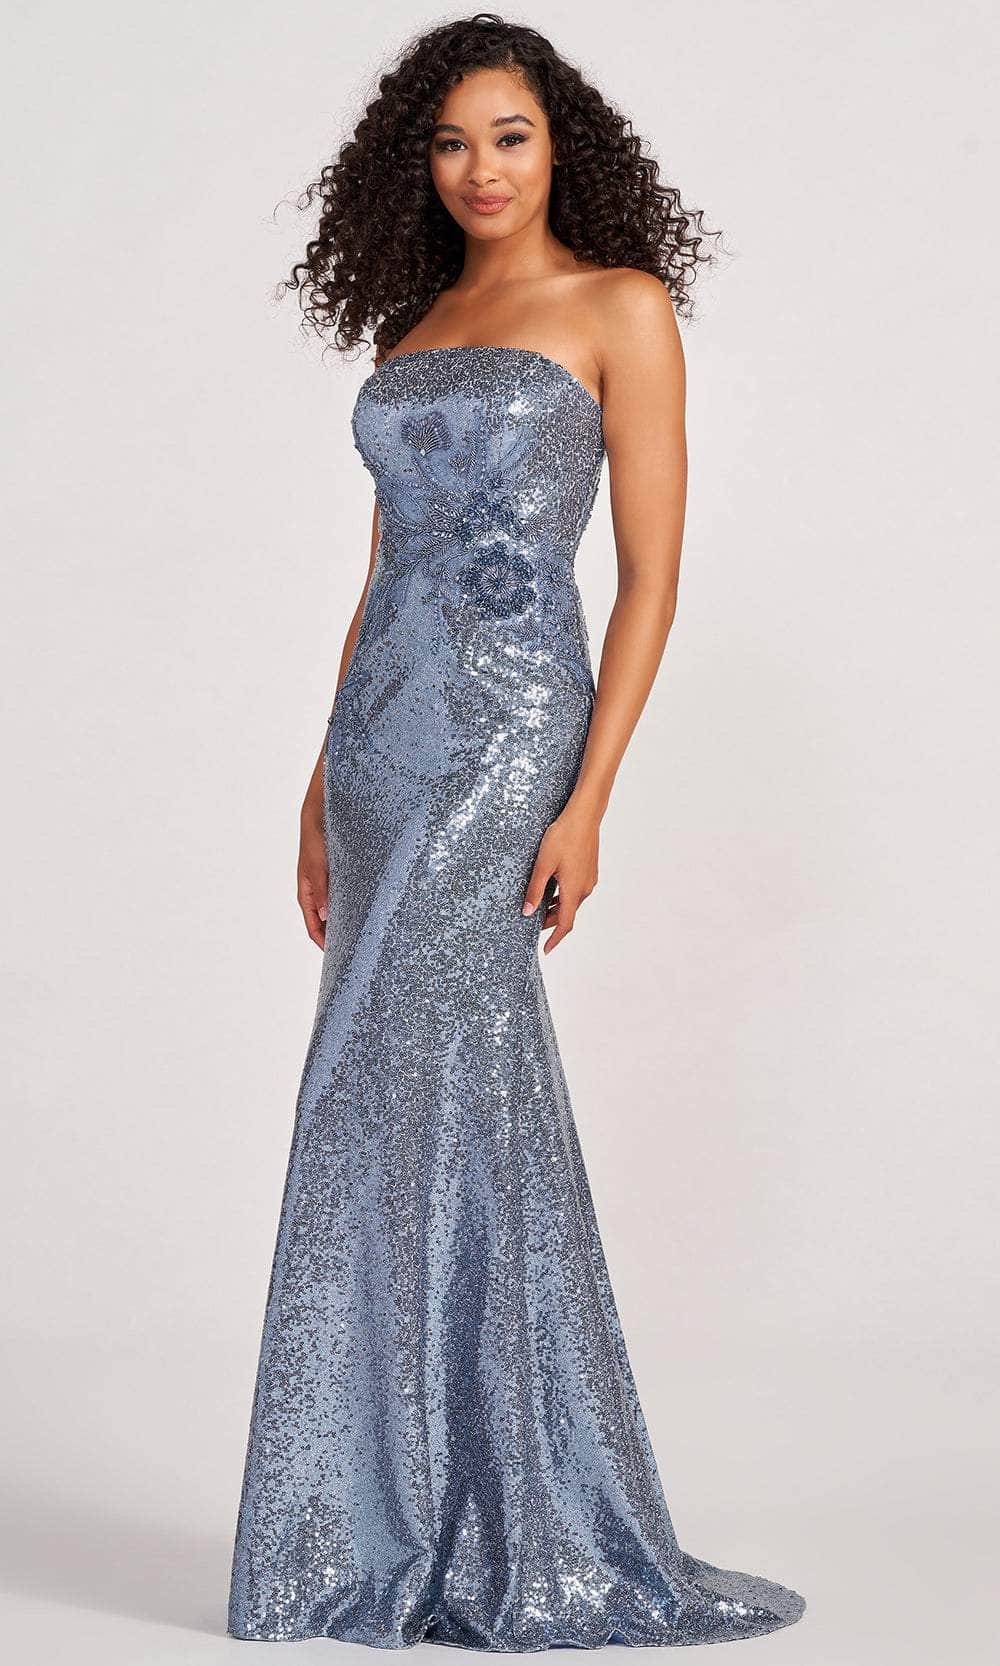 Colette for Mon Cheri CL2075 - Model is wearing Steel Blue color. Prom Dresses 00 / Steel Blue